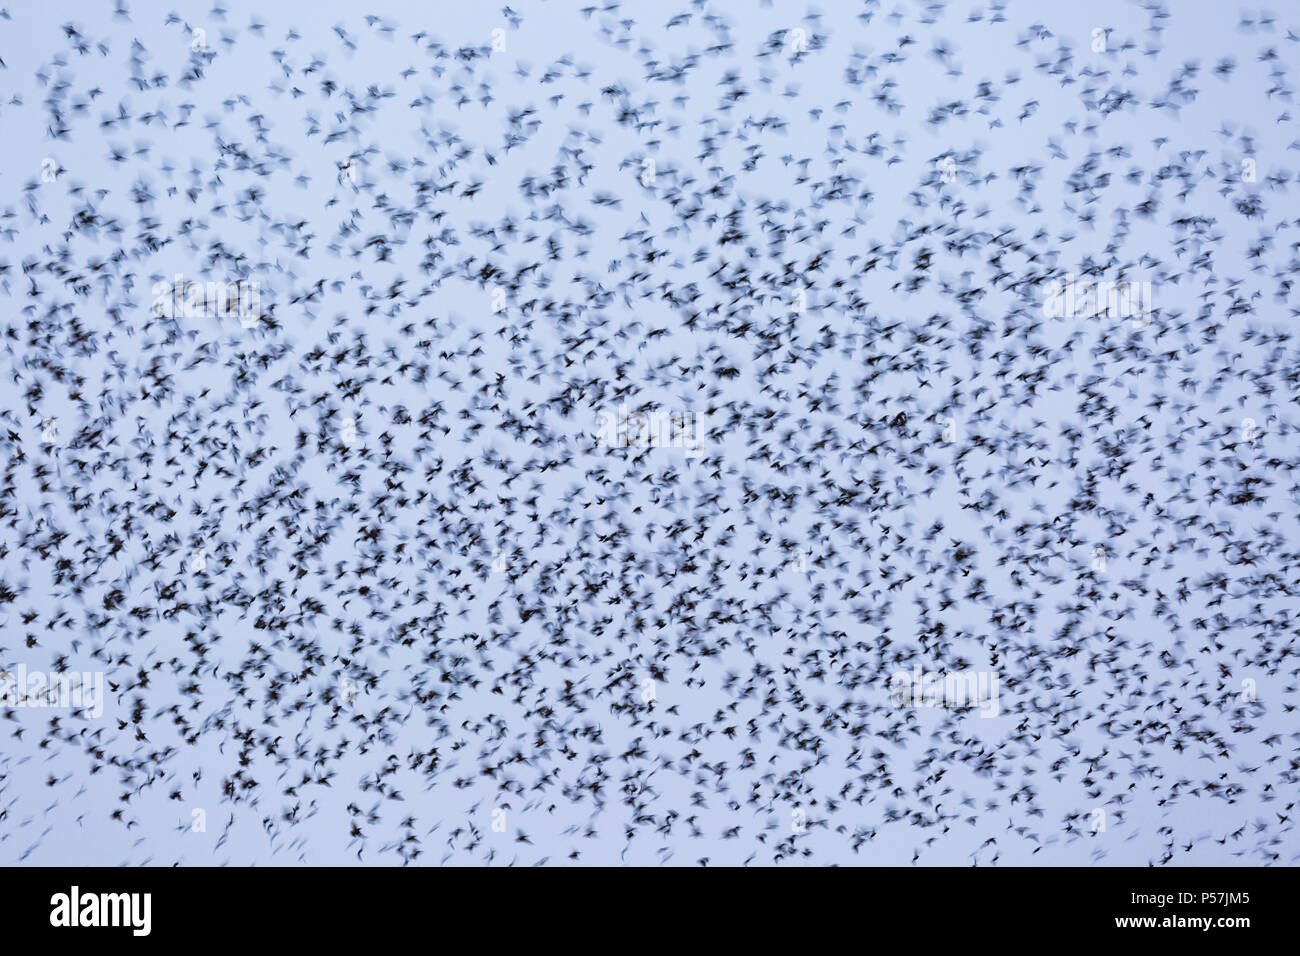 Massive murmuration gregge di comune Starling Sturnus vulgaris battenti di posatoio insieme Foto Stock